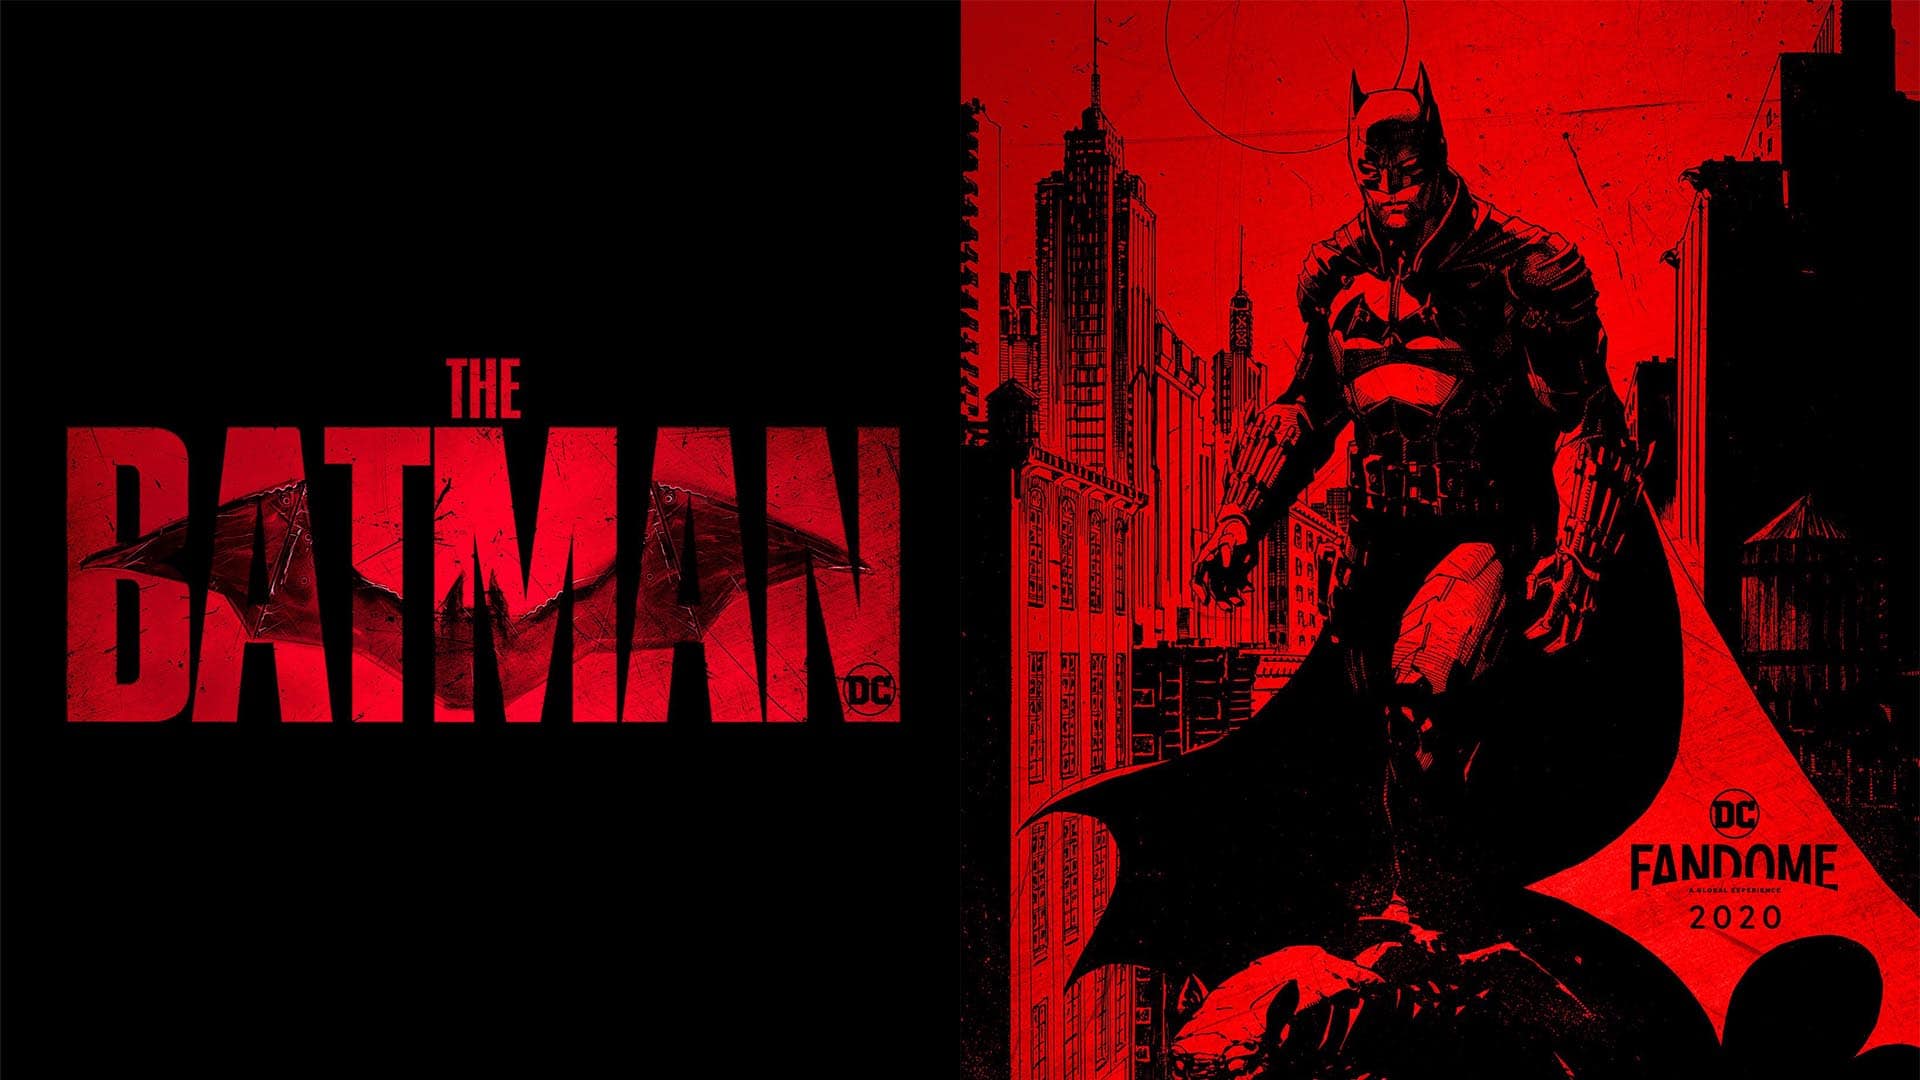 Matt Reeves Shares Official The Batman Movie Logo and Artwork